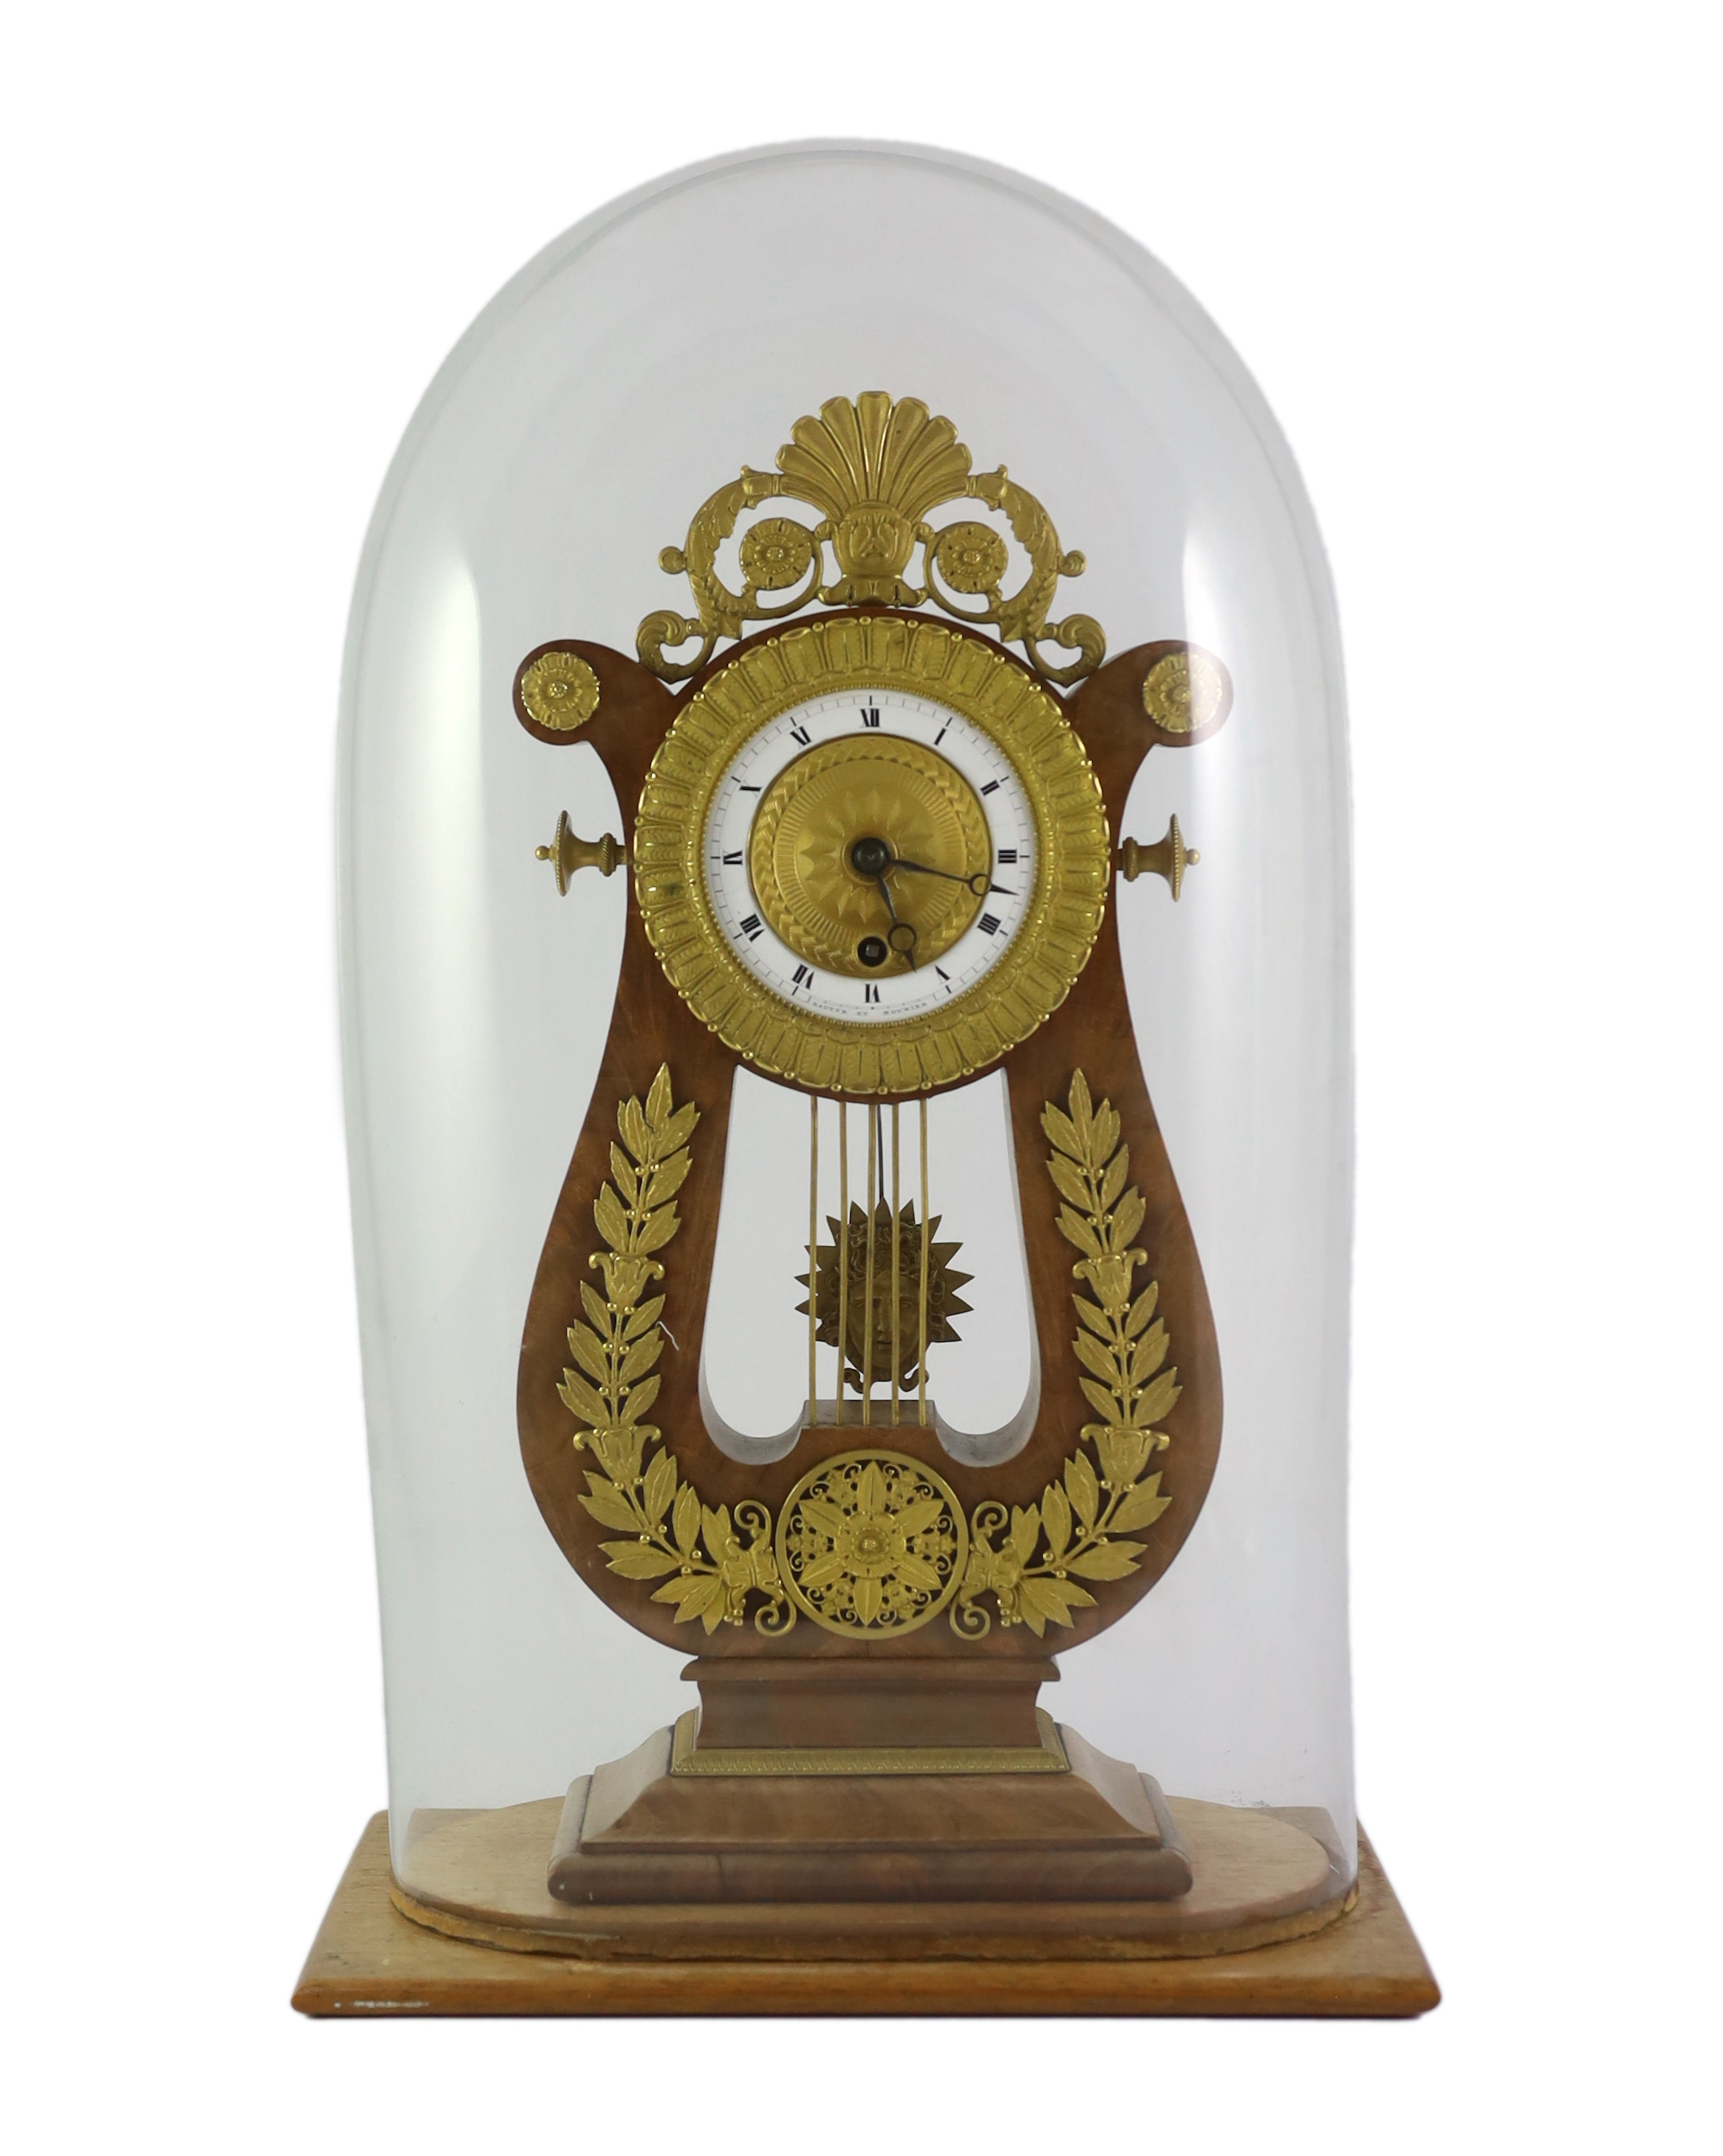 Bautte et Moynier, an early 19th century Swiss ormolu mounted mahogany lyre shaped mantel timepiece